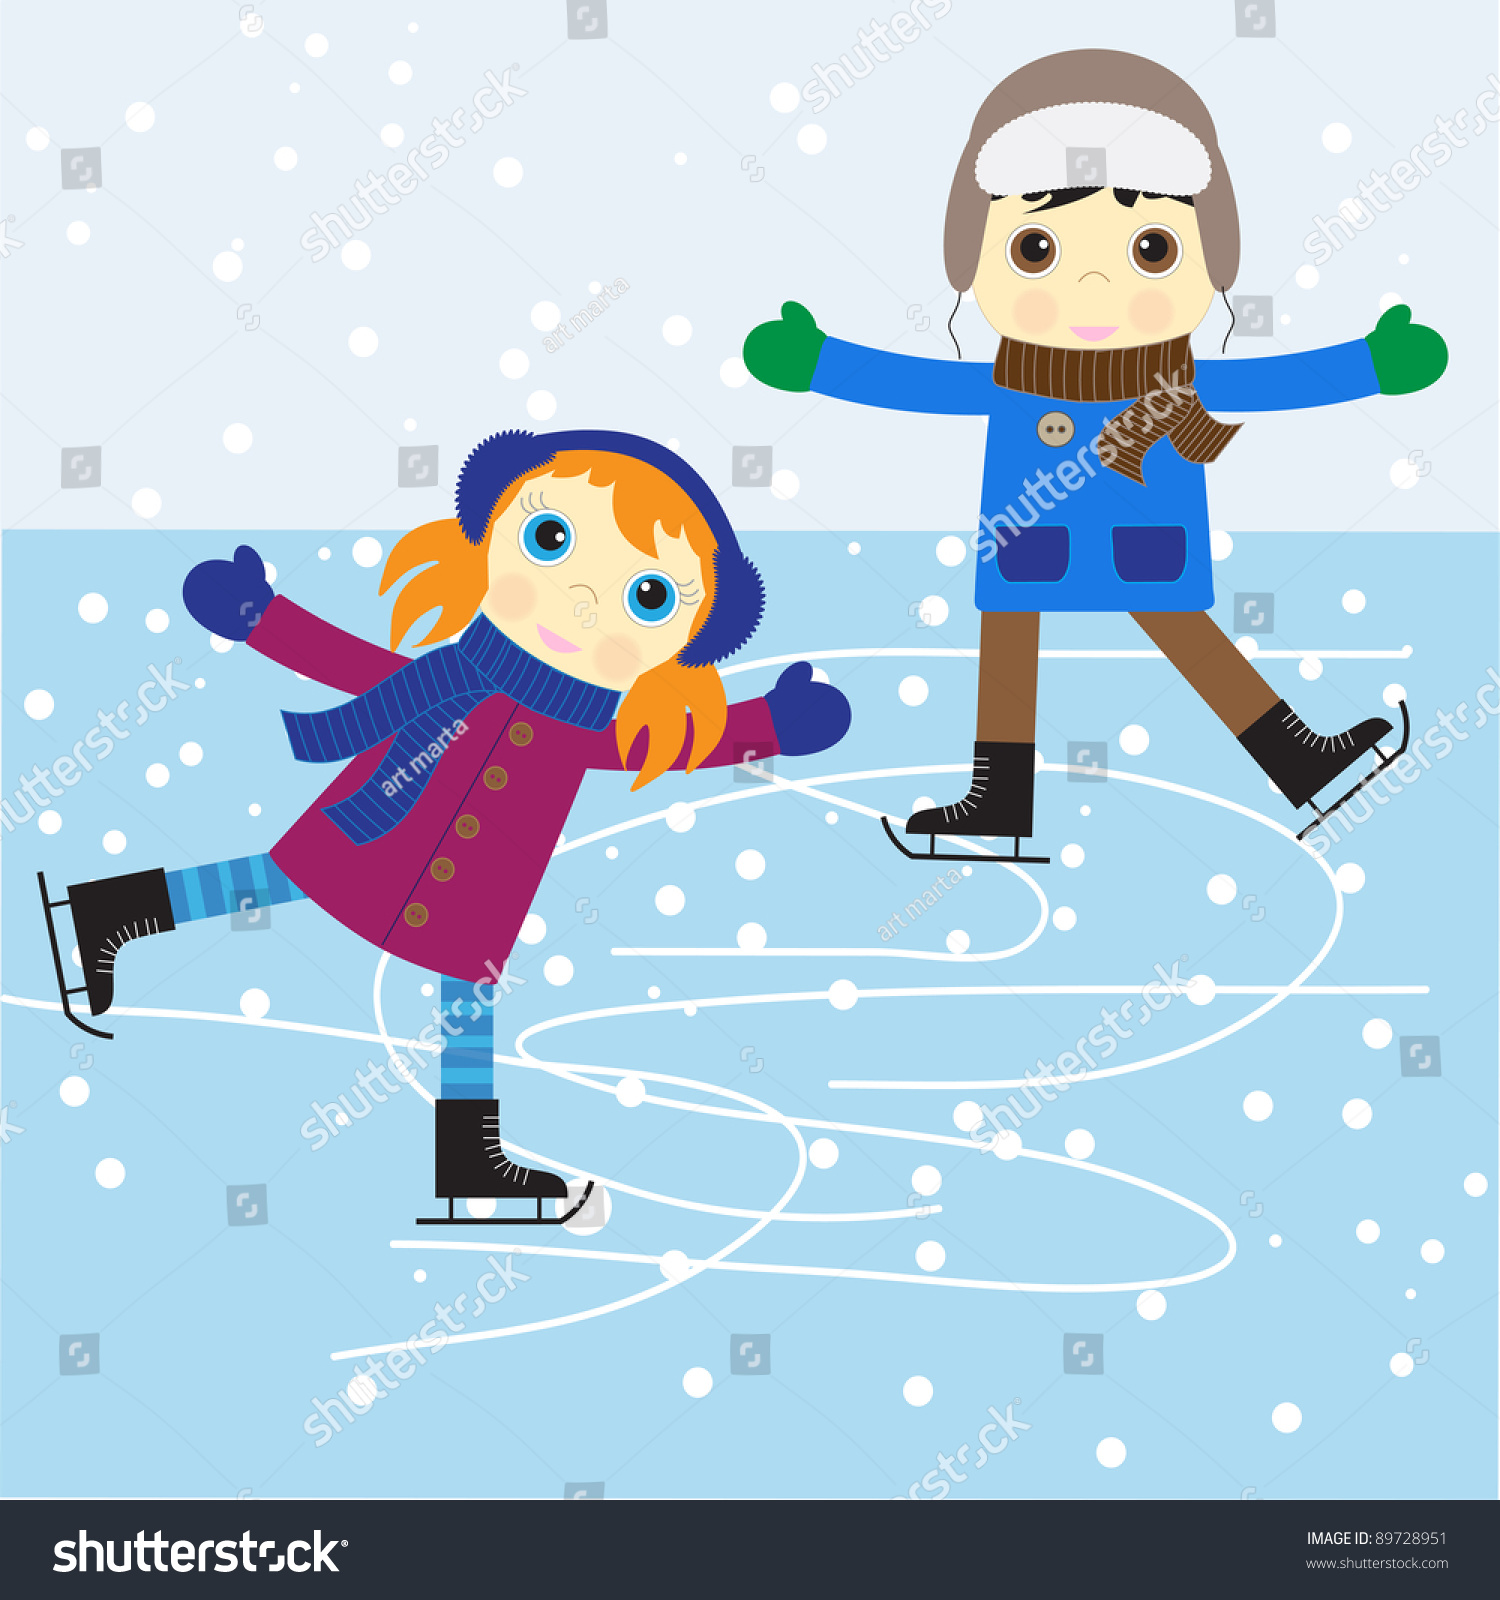 Ice Skating Boy And Girl. Vector Illustration. - 89728951 : Shutterstock